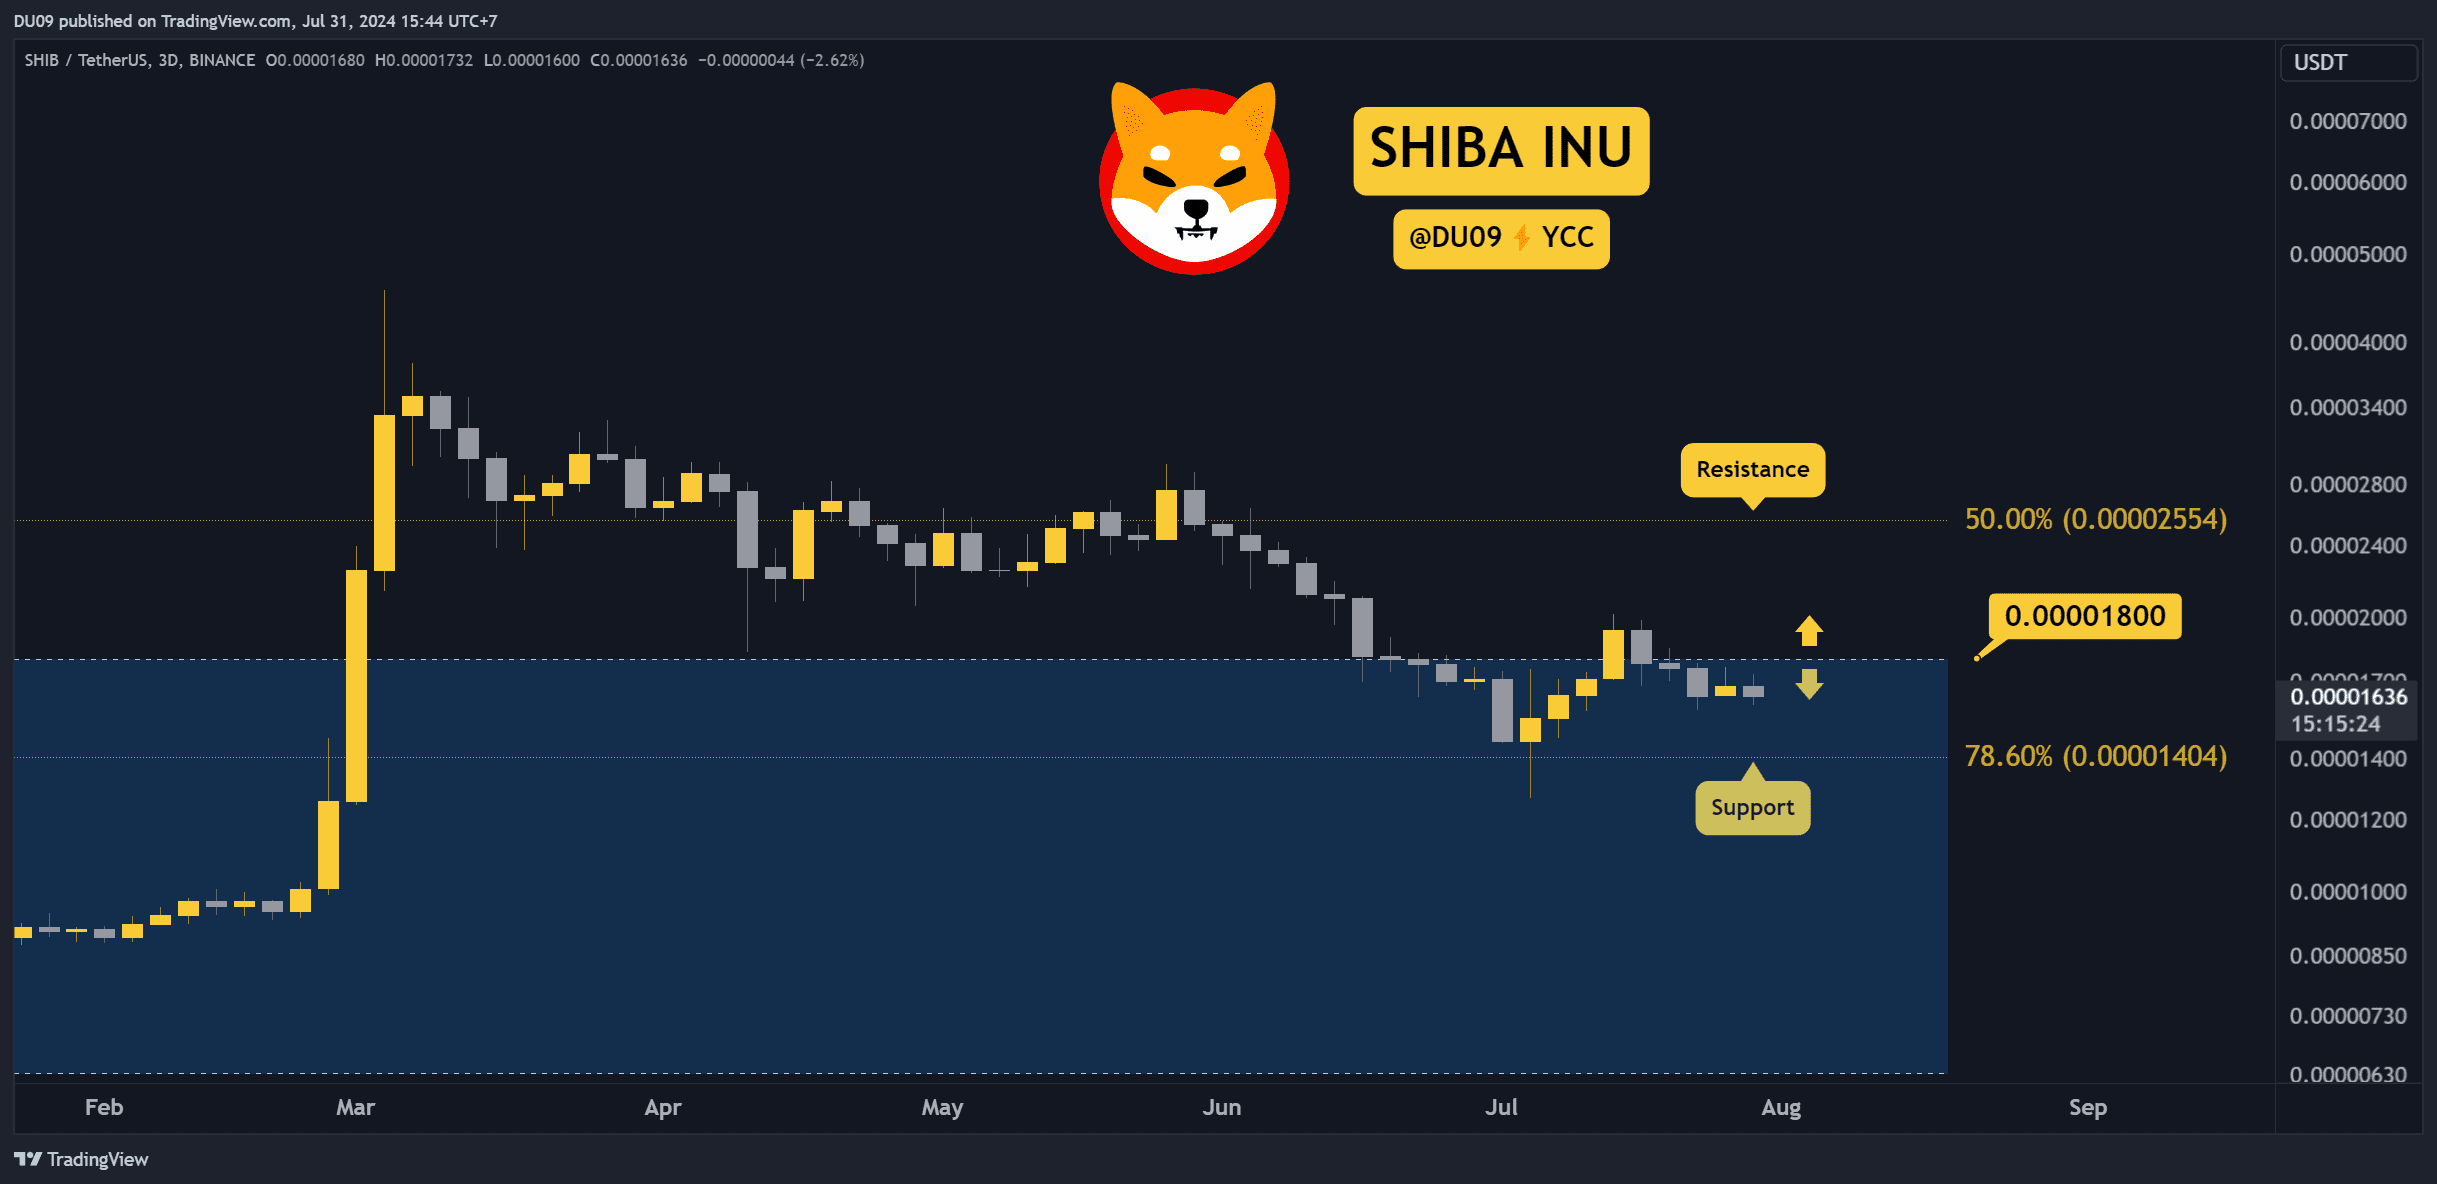 Why is the Shiba Inu (SHIB) Price Down This Week?